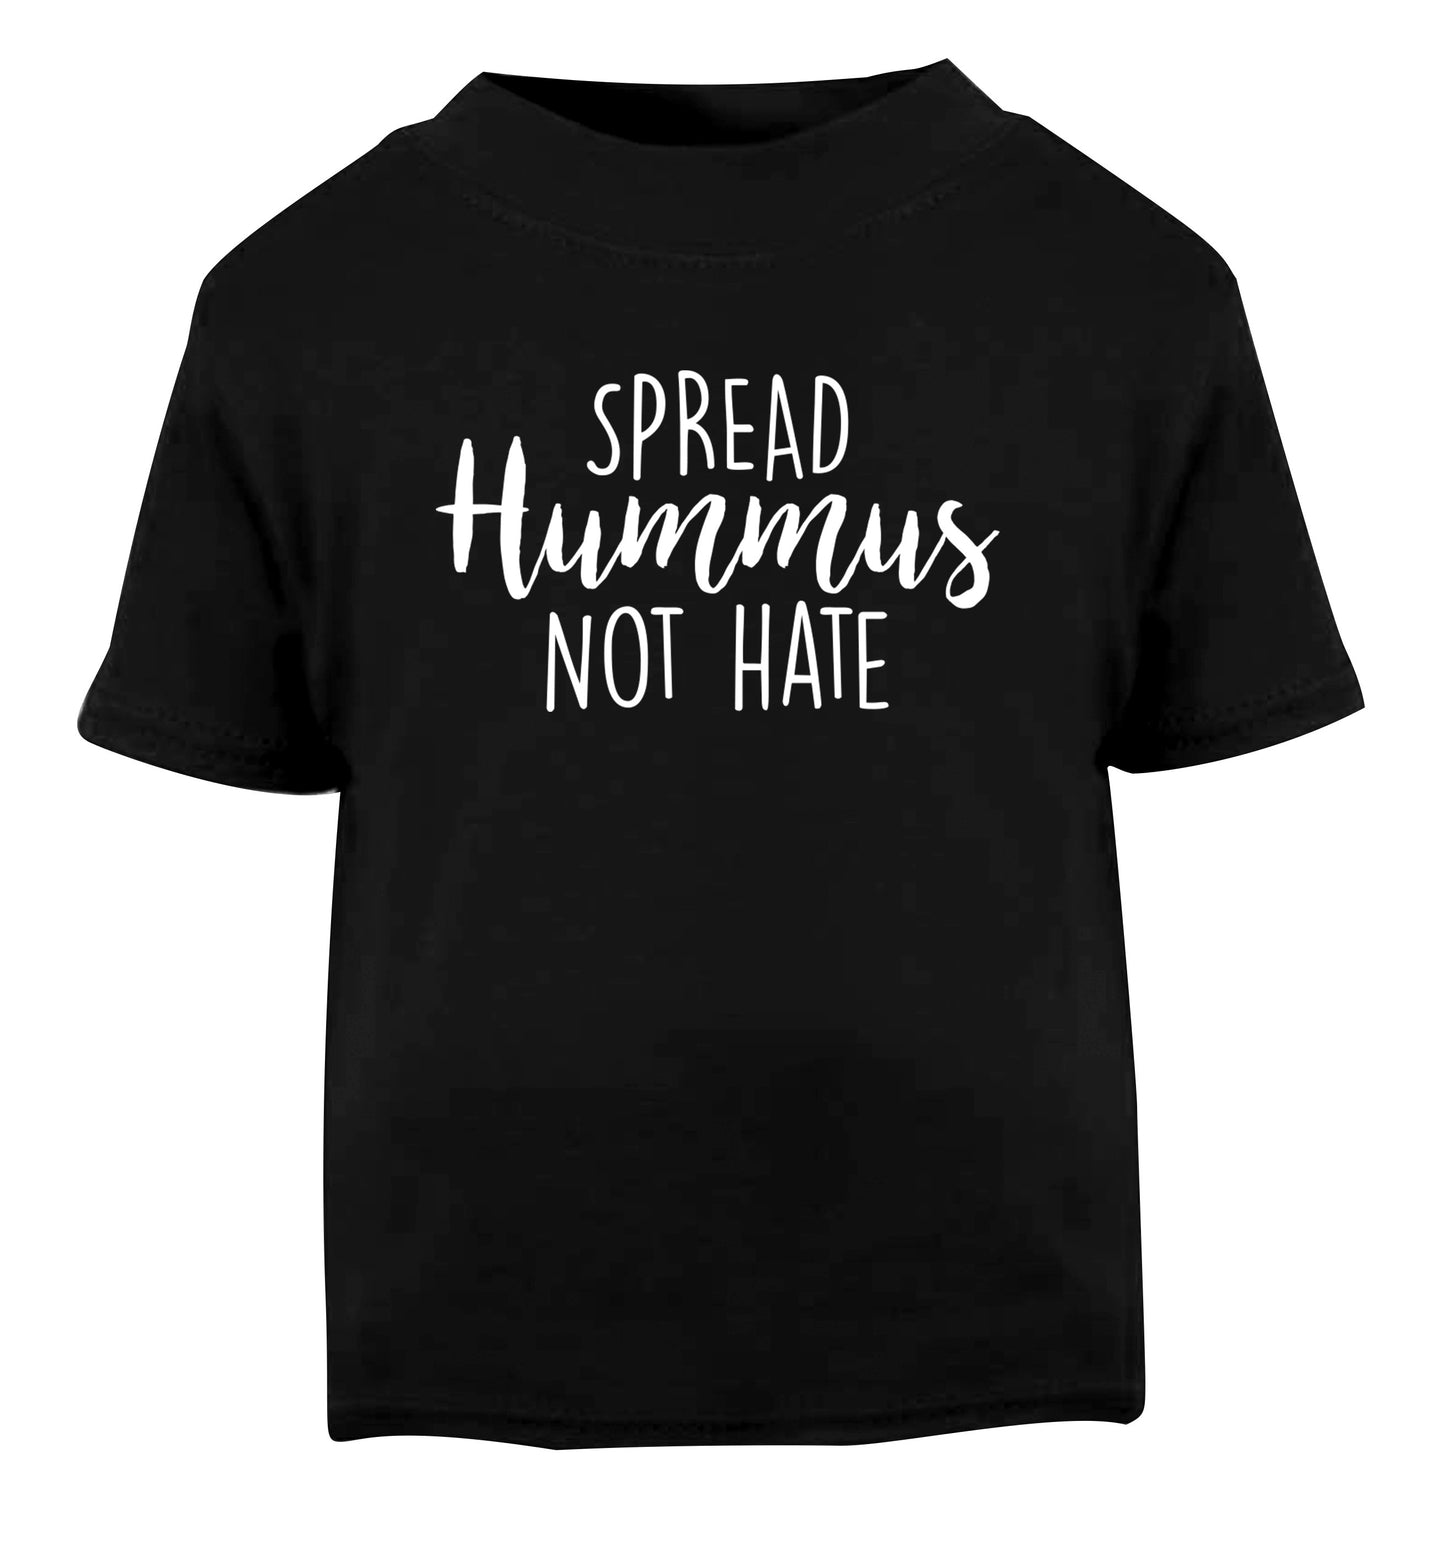 Spread hummus not hate script text Black Baby Toddler Tshirt 2 years